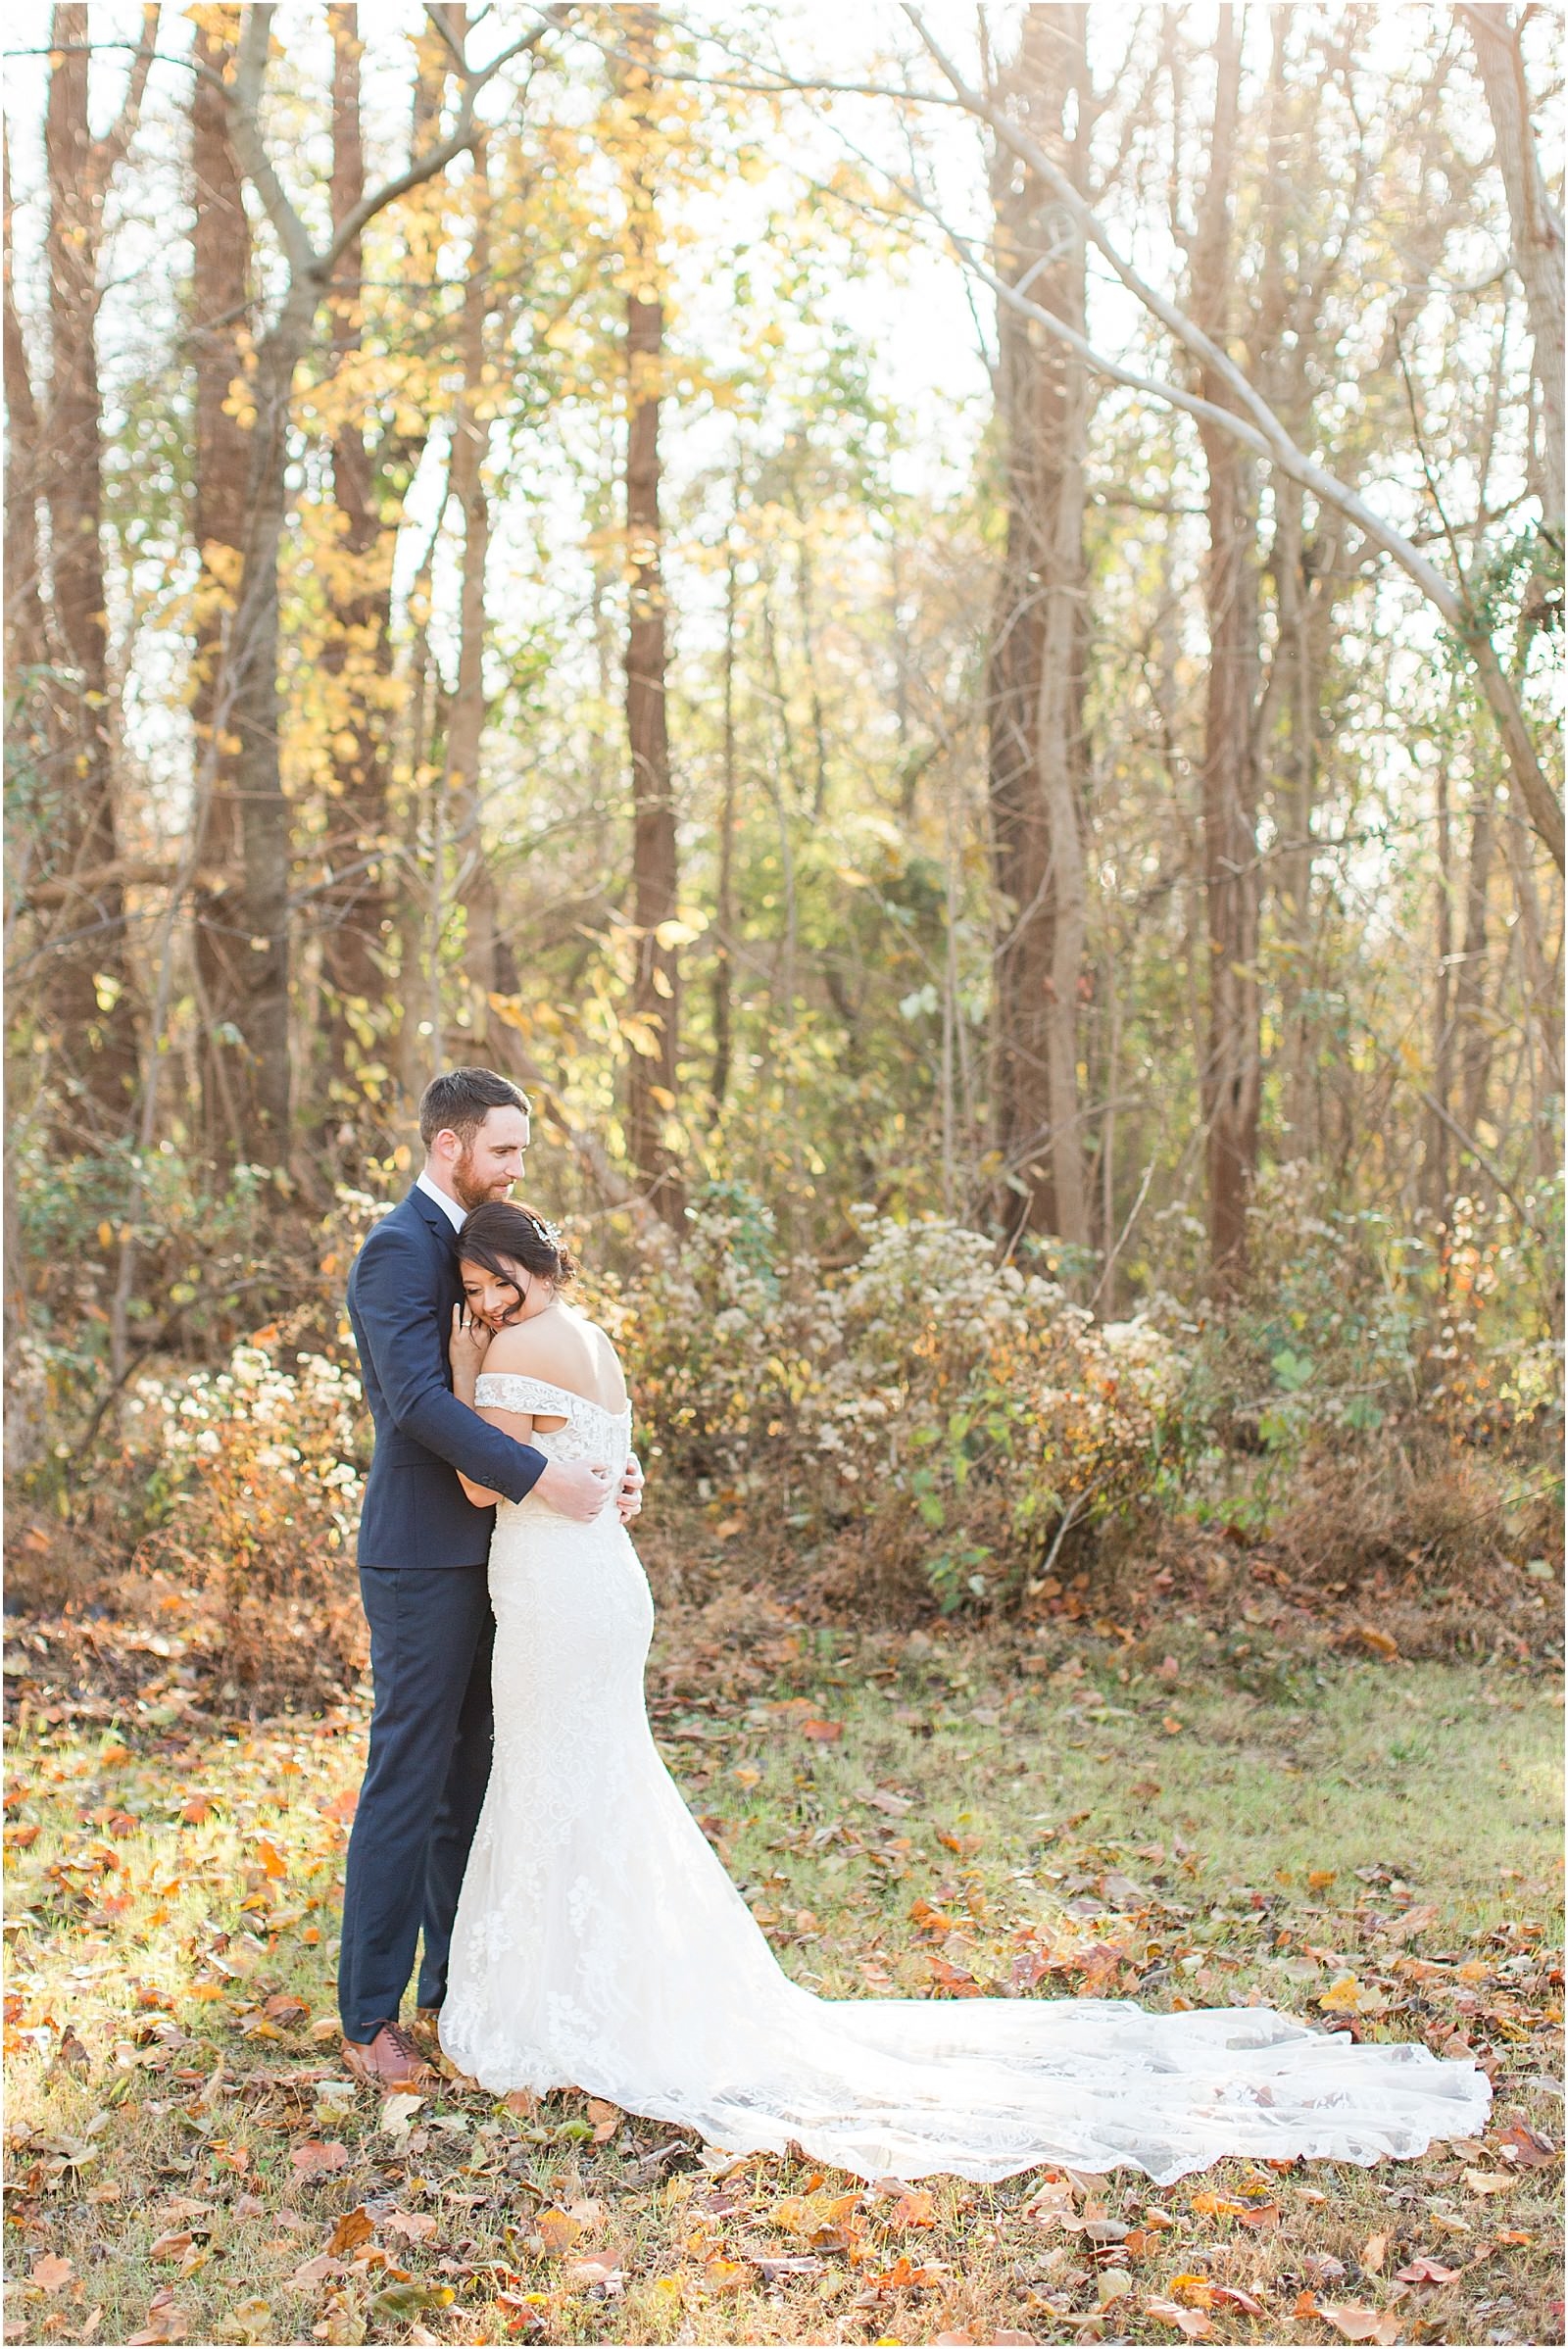 Walker and Alyssa's intimate fall wedding in Southern Indiana. | Wedding Photography | The Corner House Wedding | Southern Indiana Wedding | #fallwedding #intimatewedding | 027.jpg